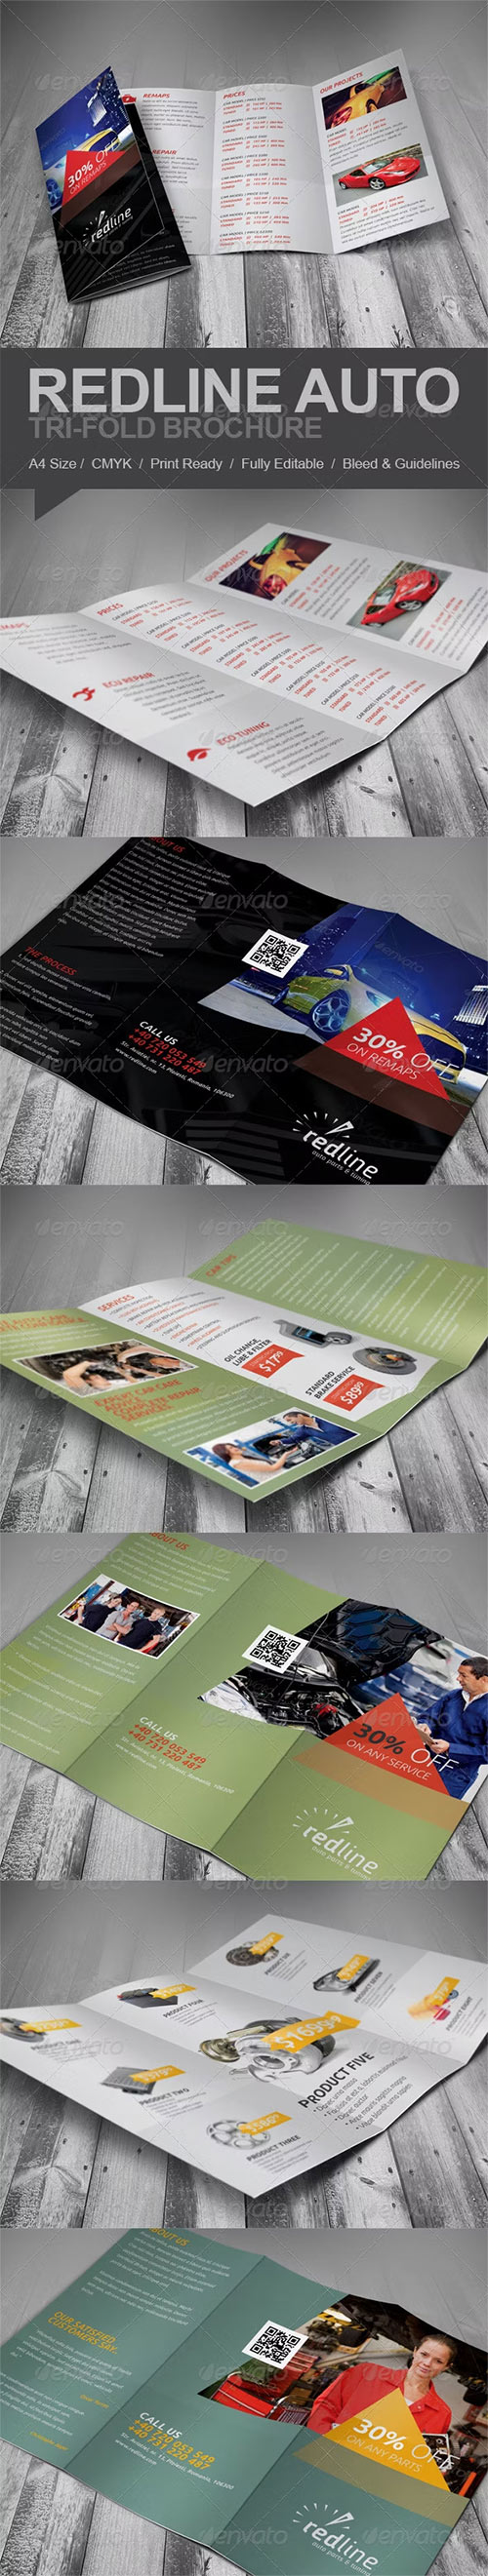 Redline Auto Tri-fold Brochure 5809238